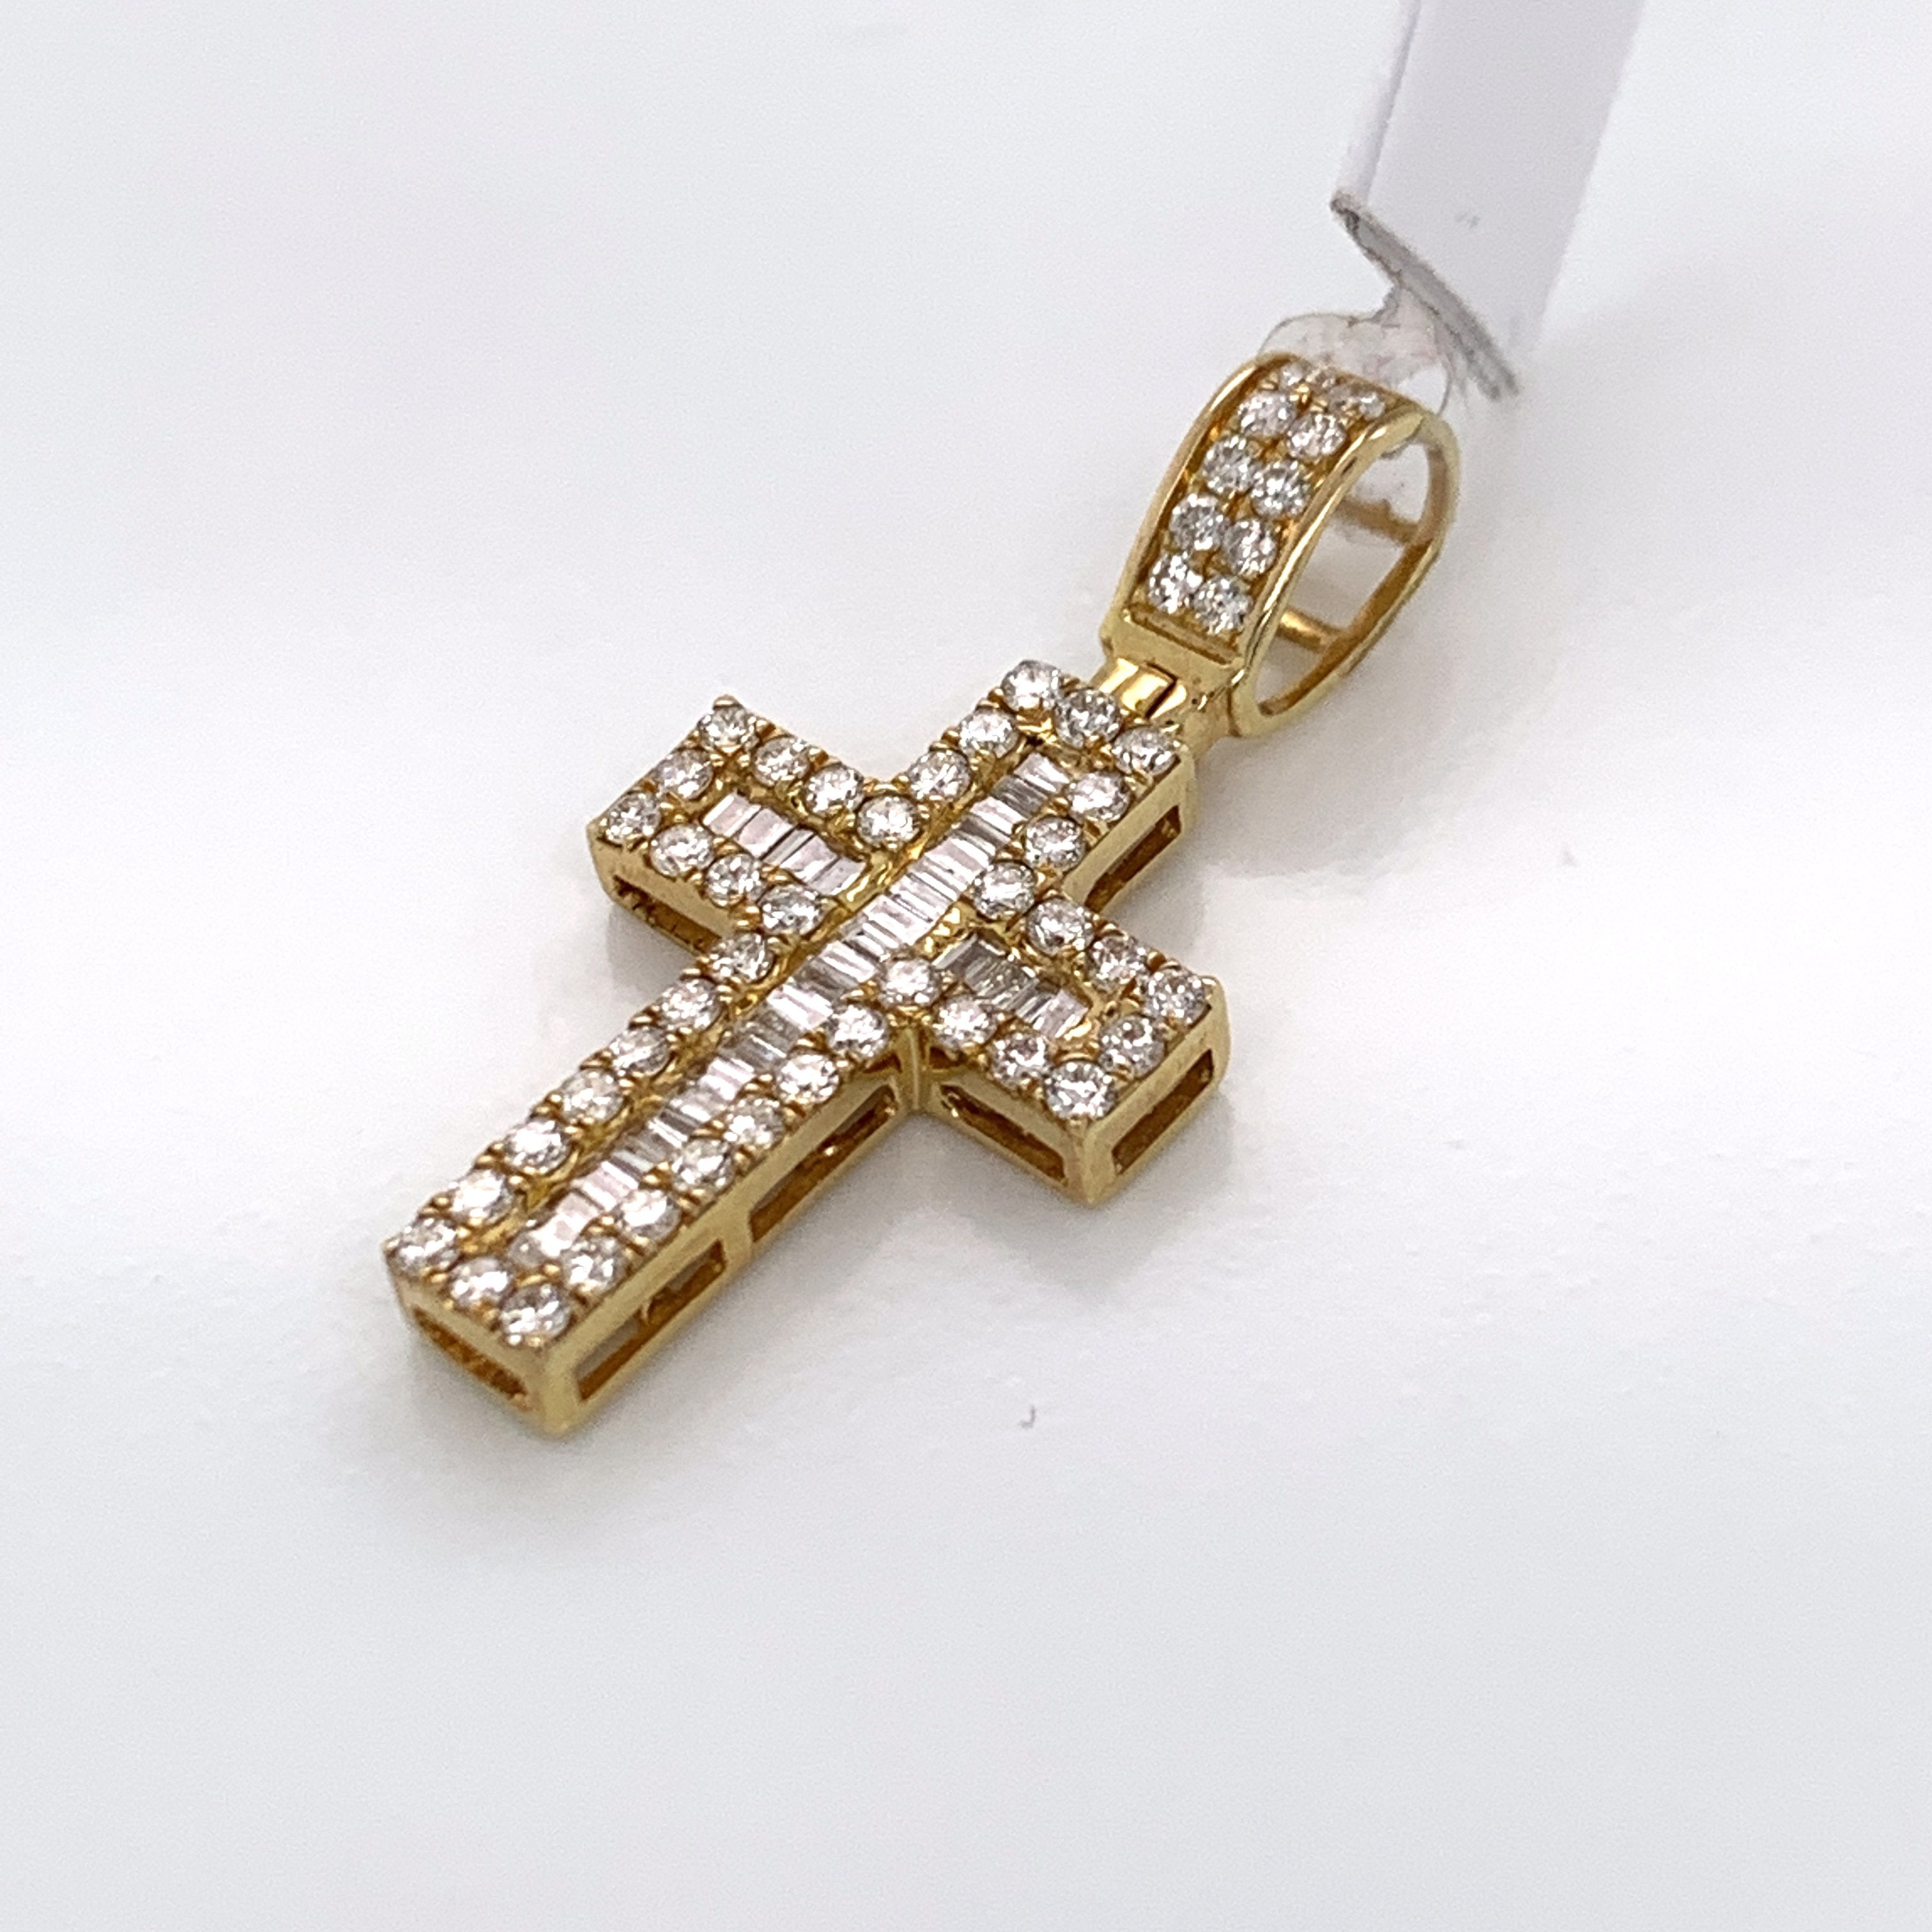 0.90CT Diamond Cross Pendant in 10K Gold - White Carat Diamonds 